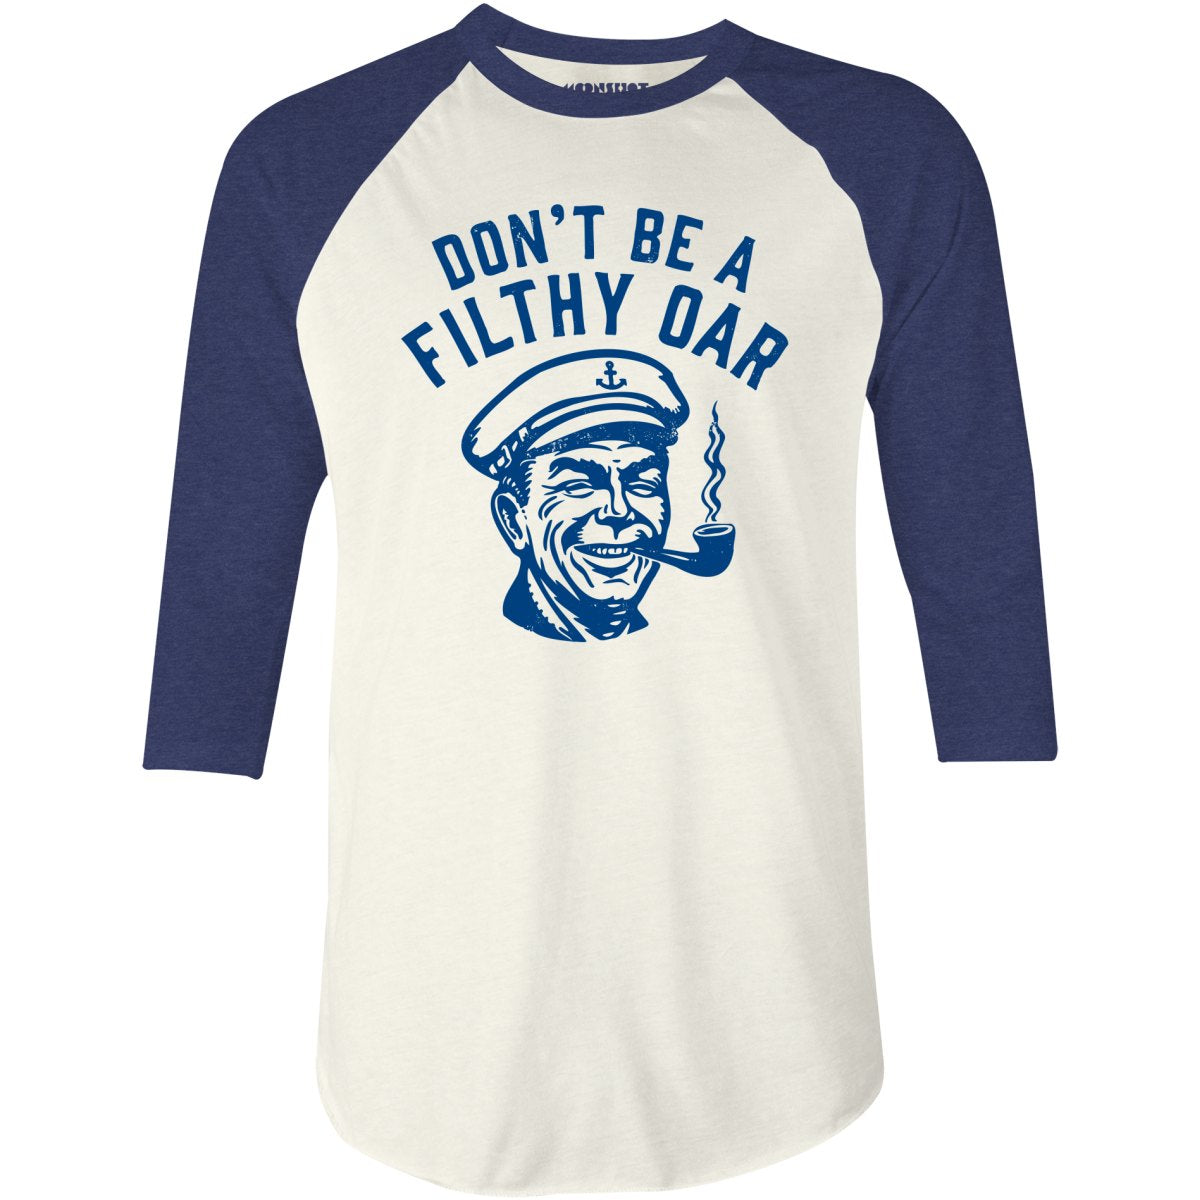 Don't Be a Filthy Oar - 3/4 Sleeve Raglan T-Shirt